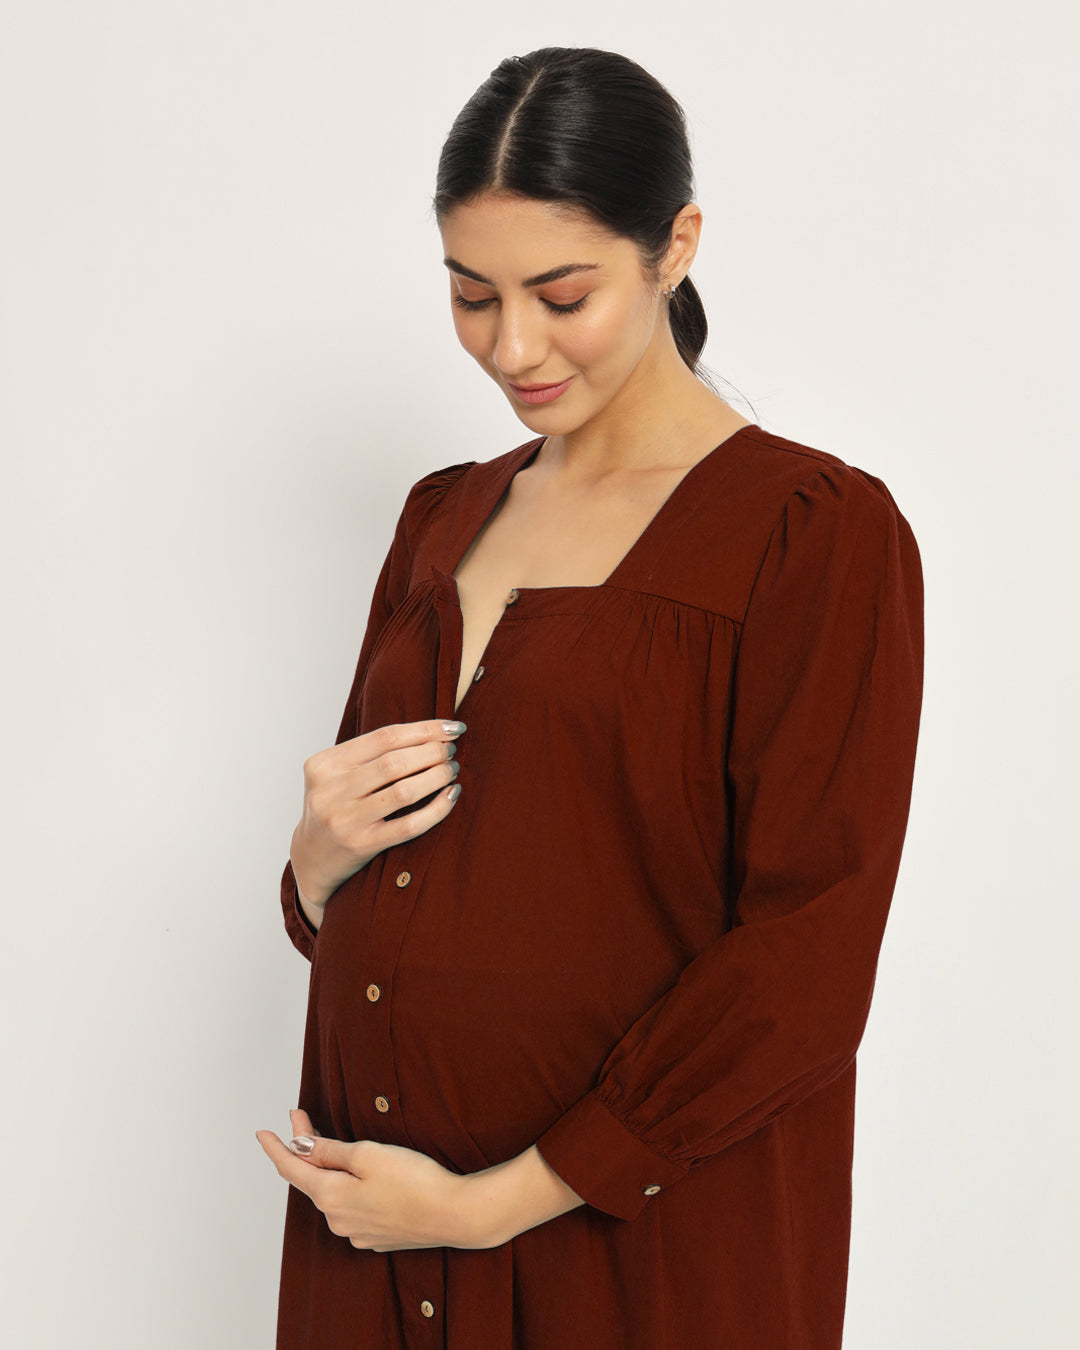 Russet Red Belly Blossom Maternity & Nursing Dress